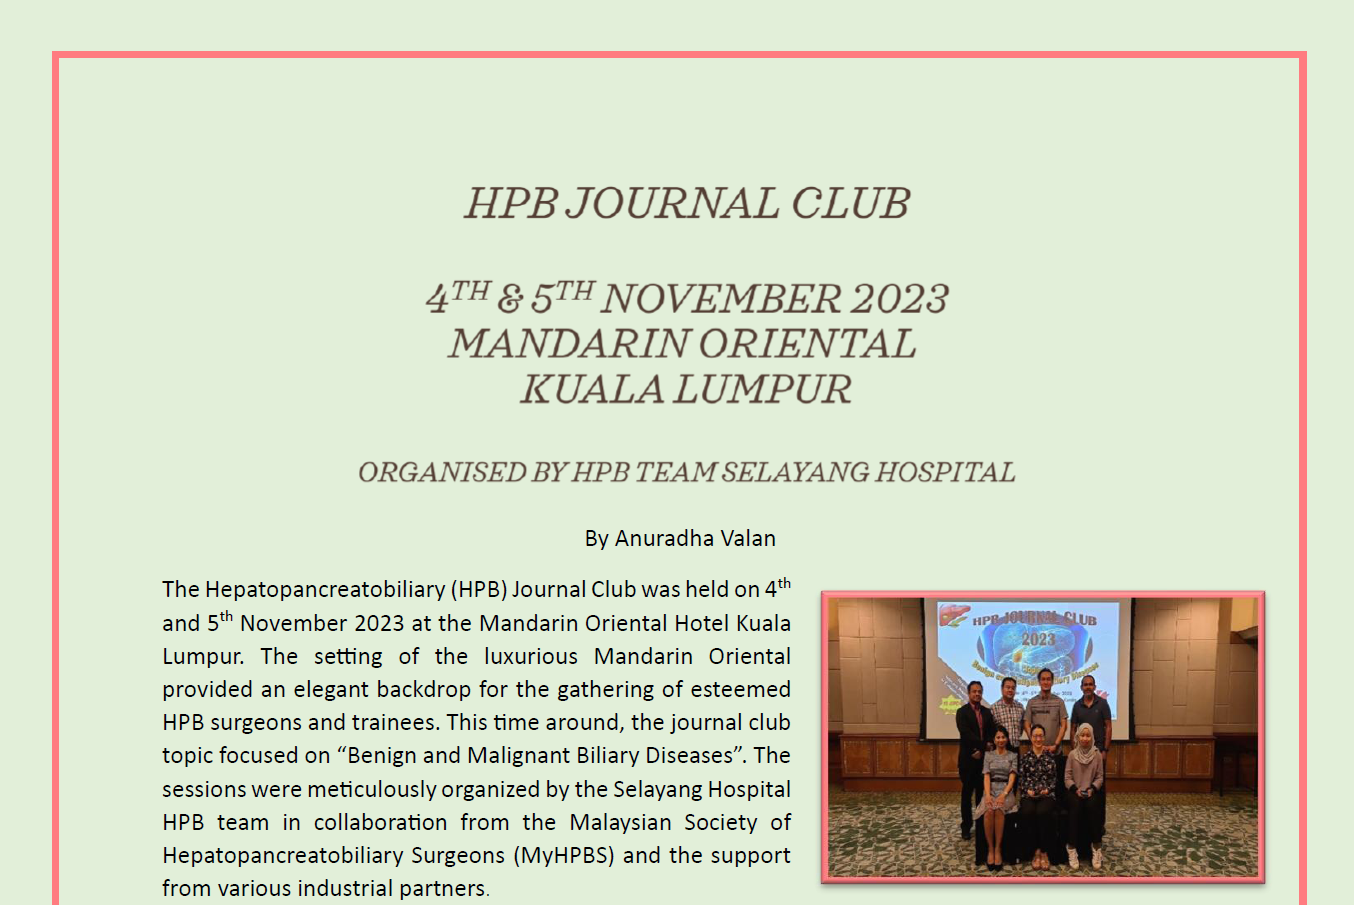 HPB JOURNAL CLUB - 4TH & 5TH NOVEMBER 2023